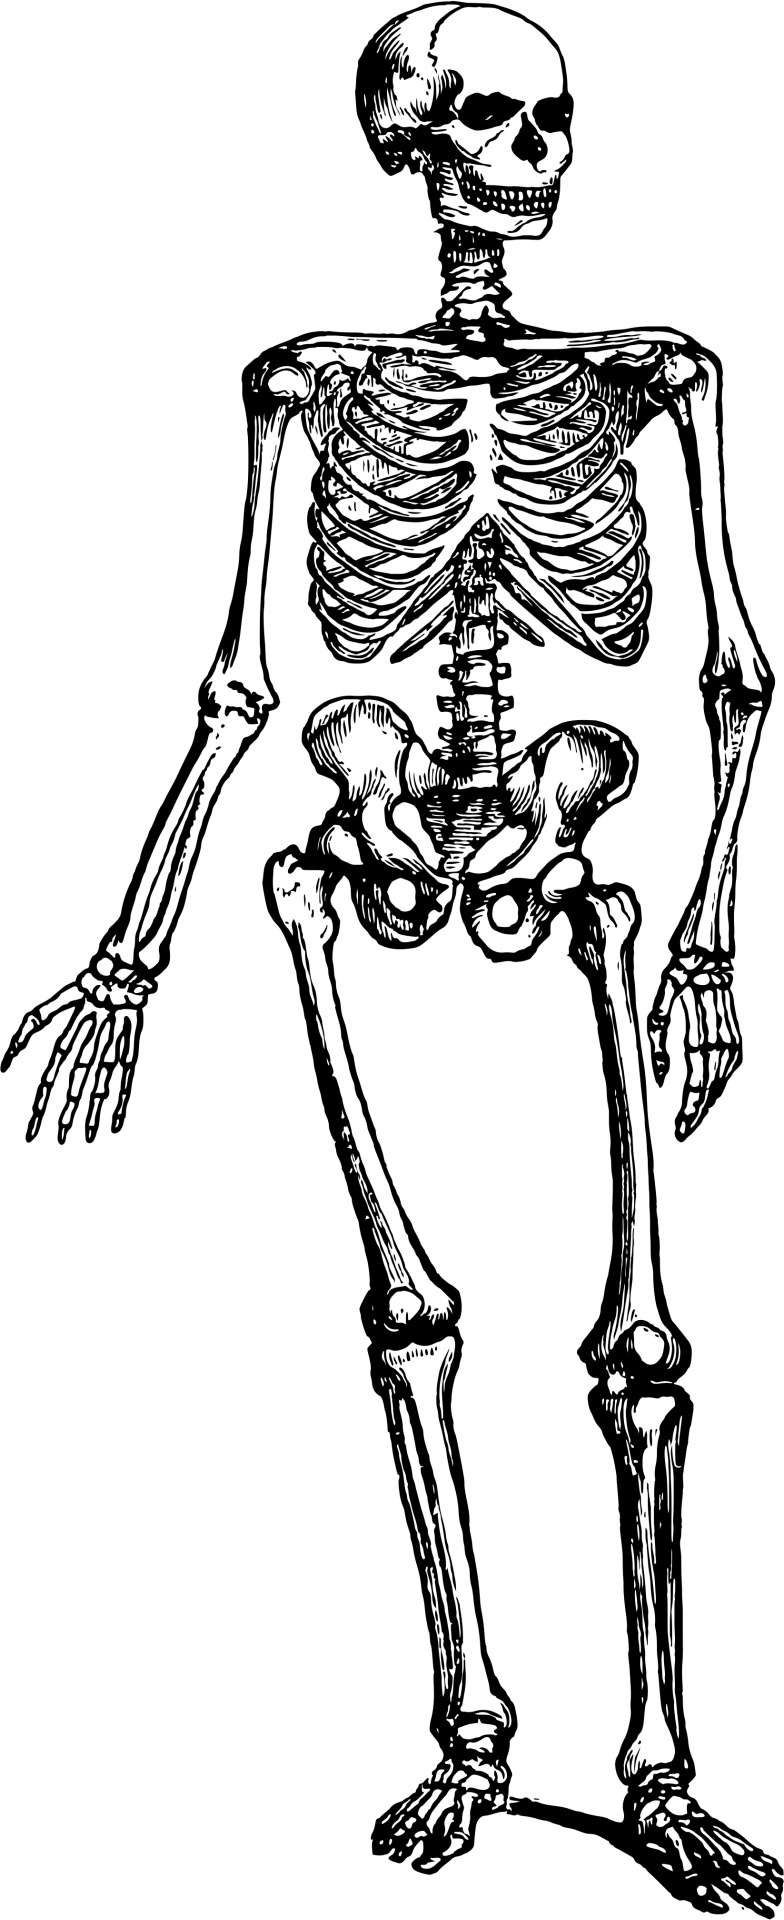 Re digitized vintage public domain illustration of a black and white human skeleton.